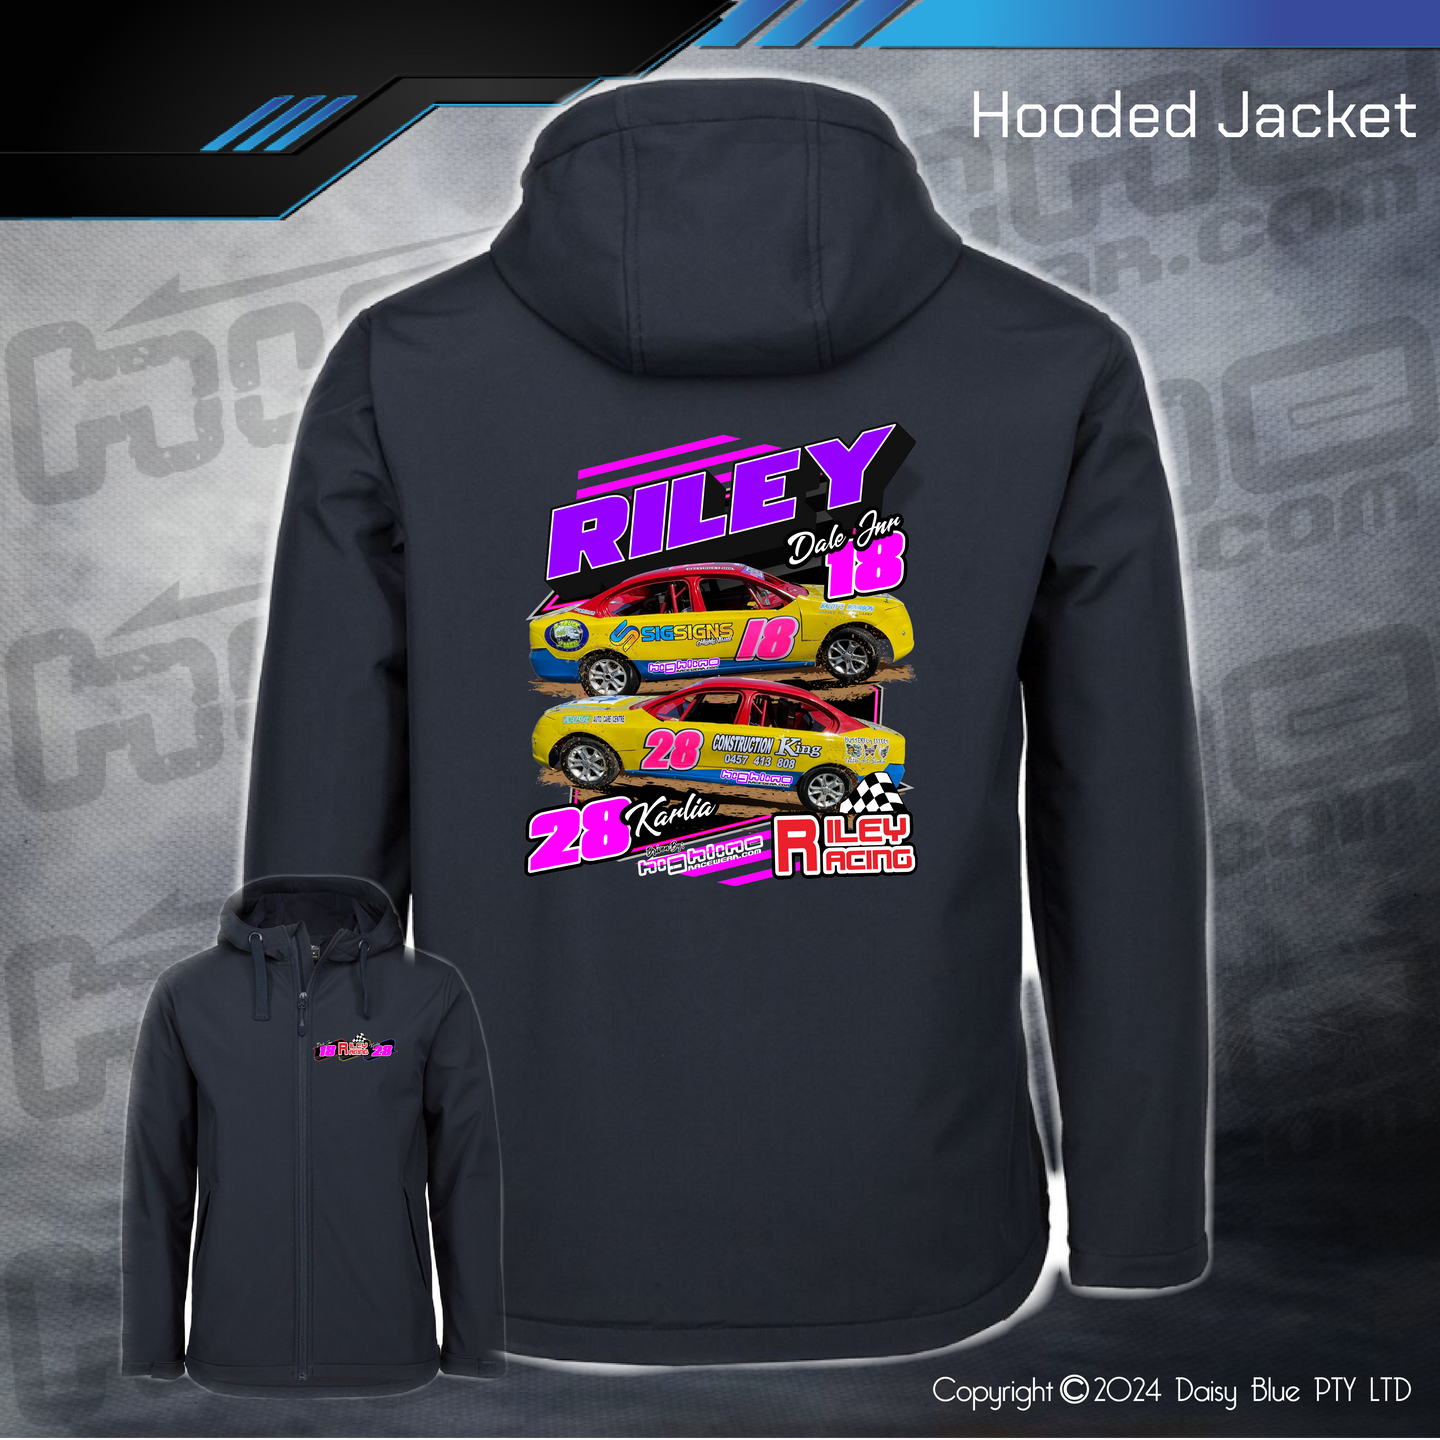 Hooded Jacket - Riley Racing